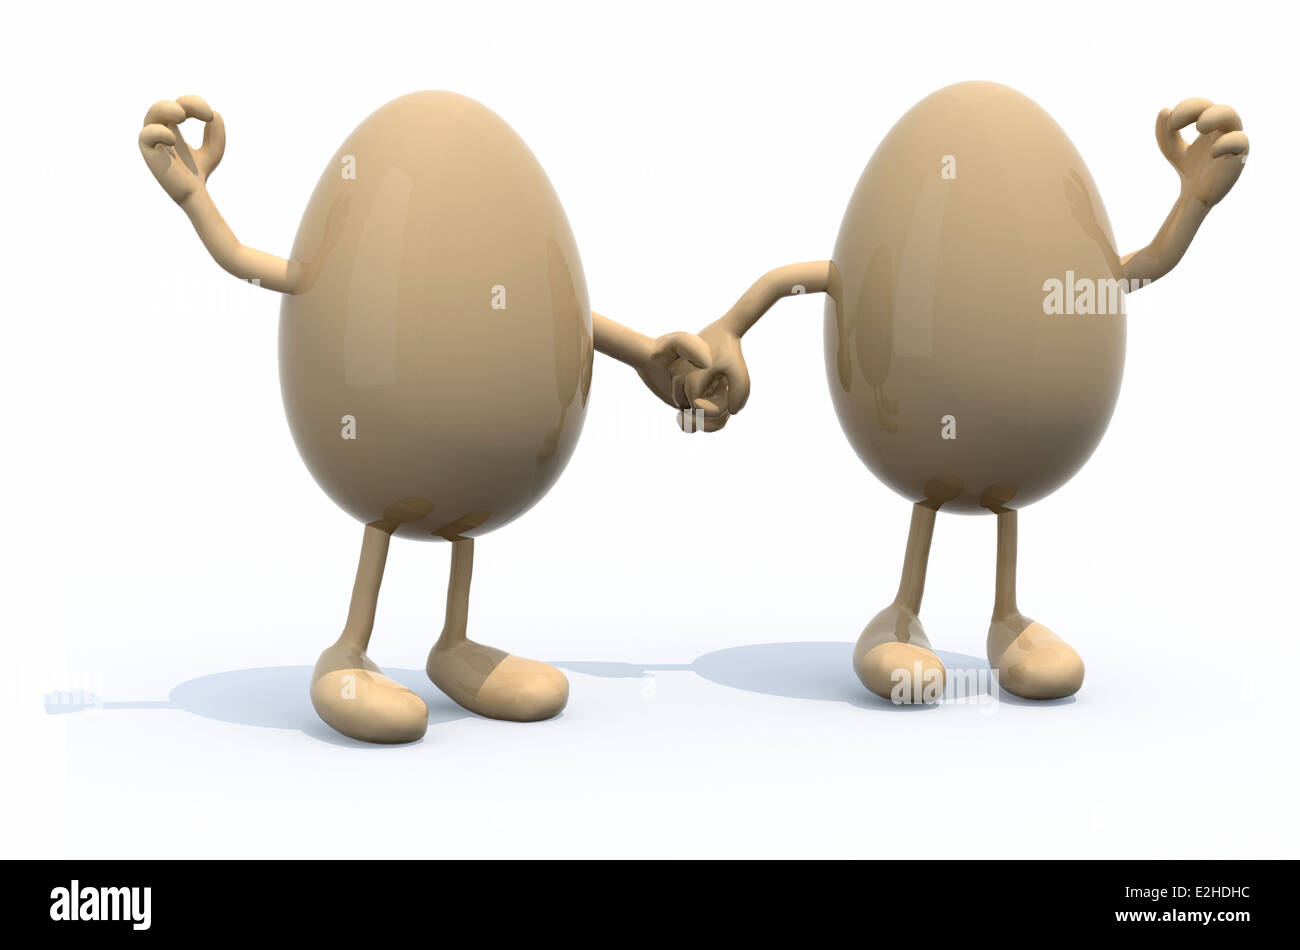 Включи 3 яйца. Яйцо с руками и ногами. Яйцо на ножках. Яйца убегают. Два яйца.